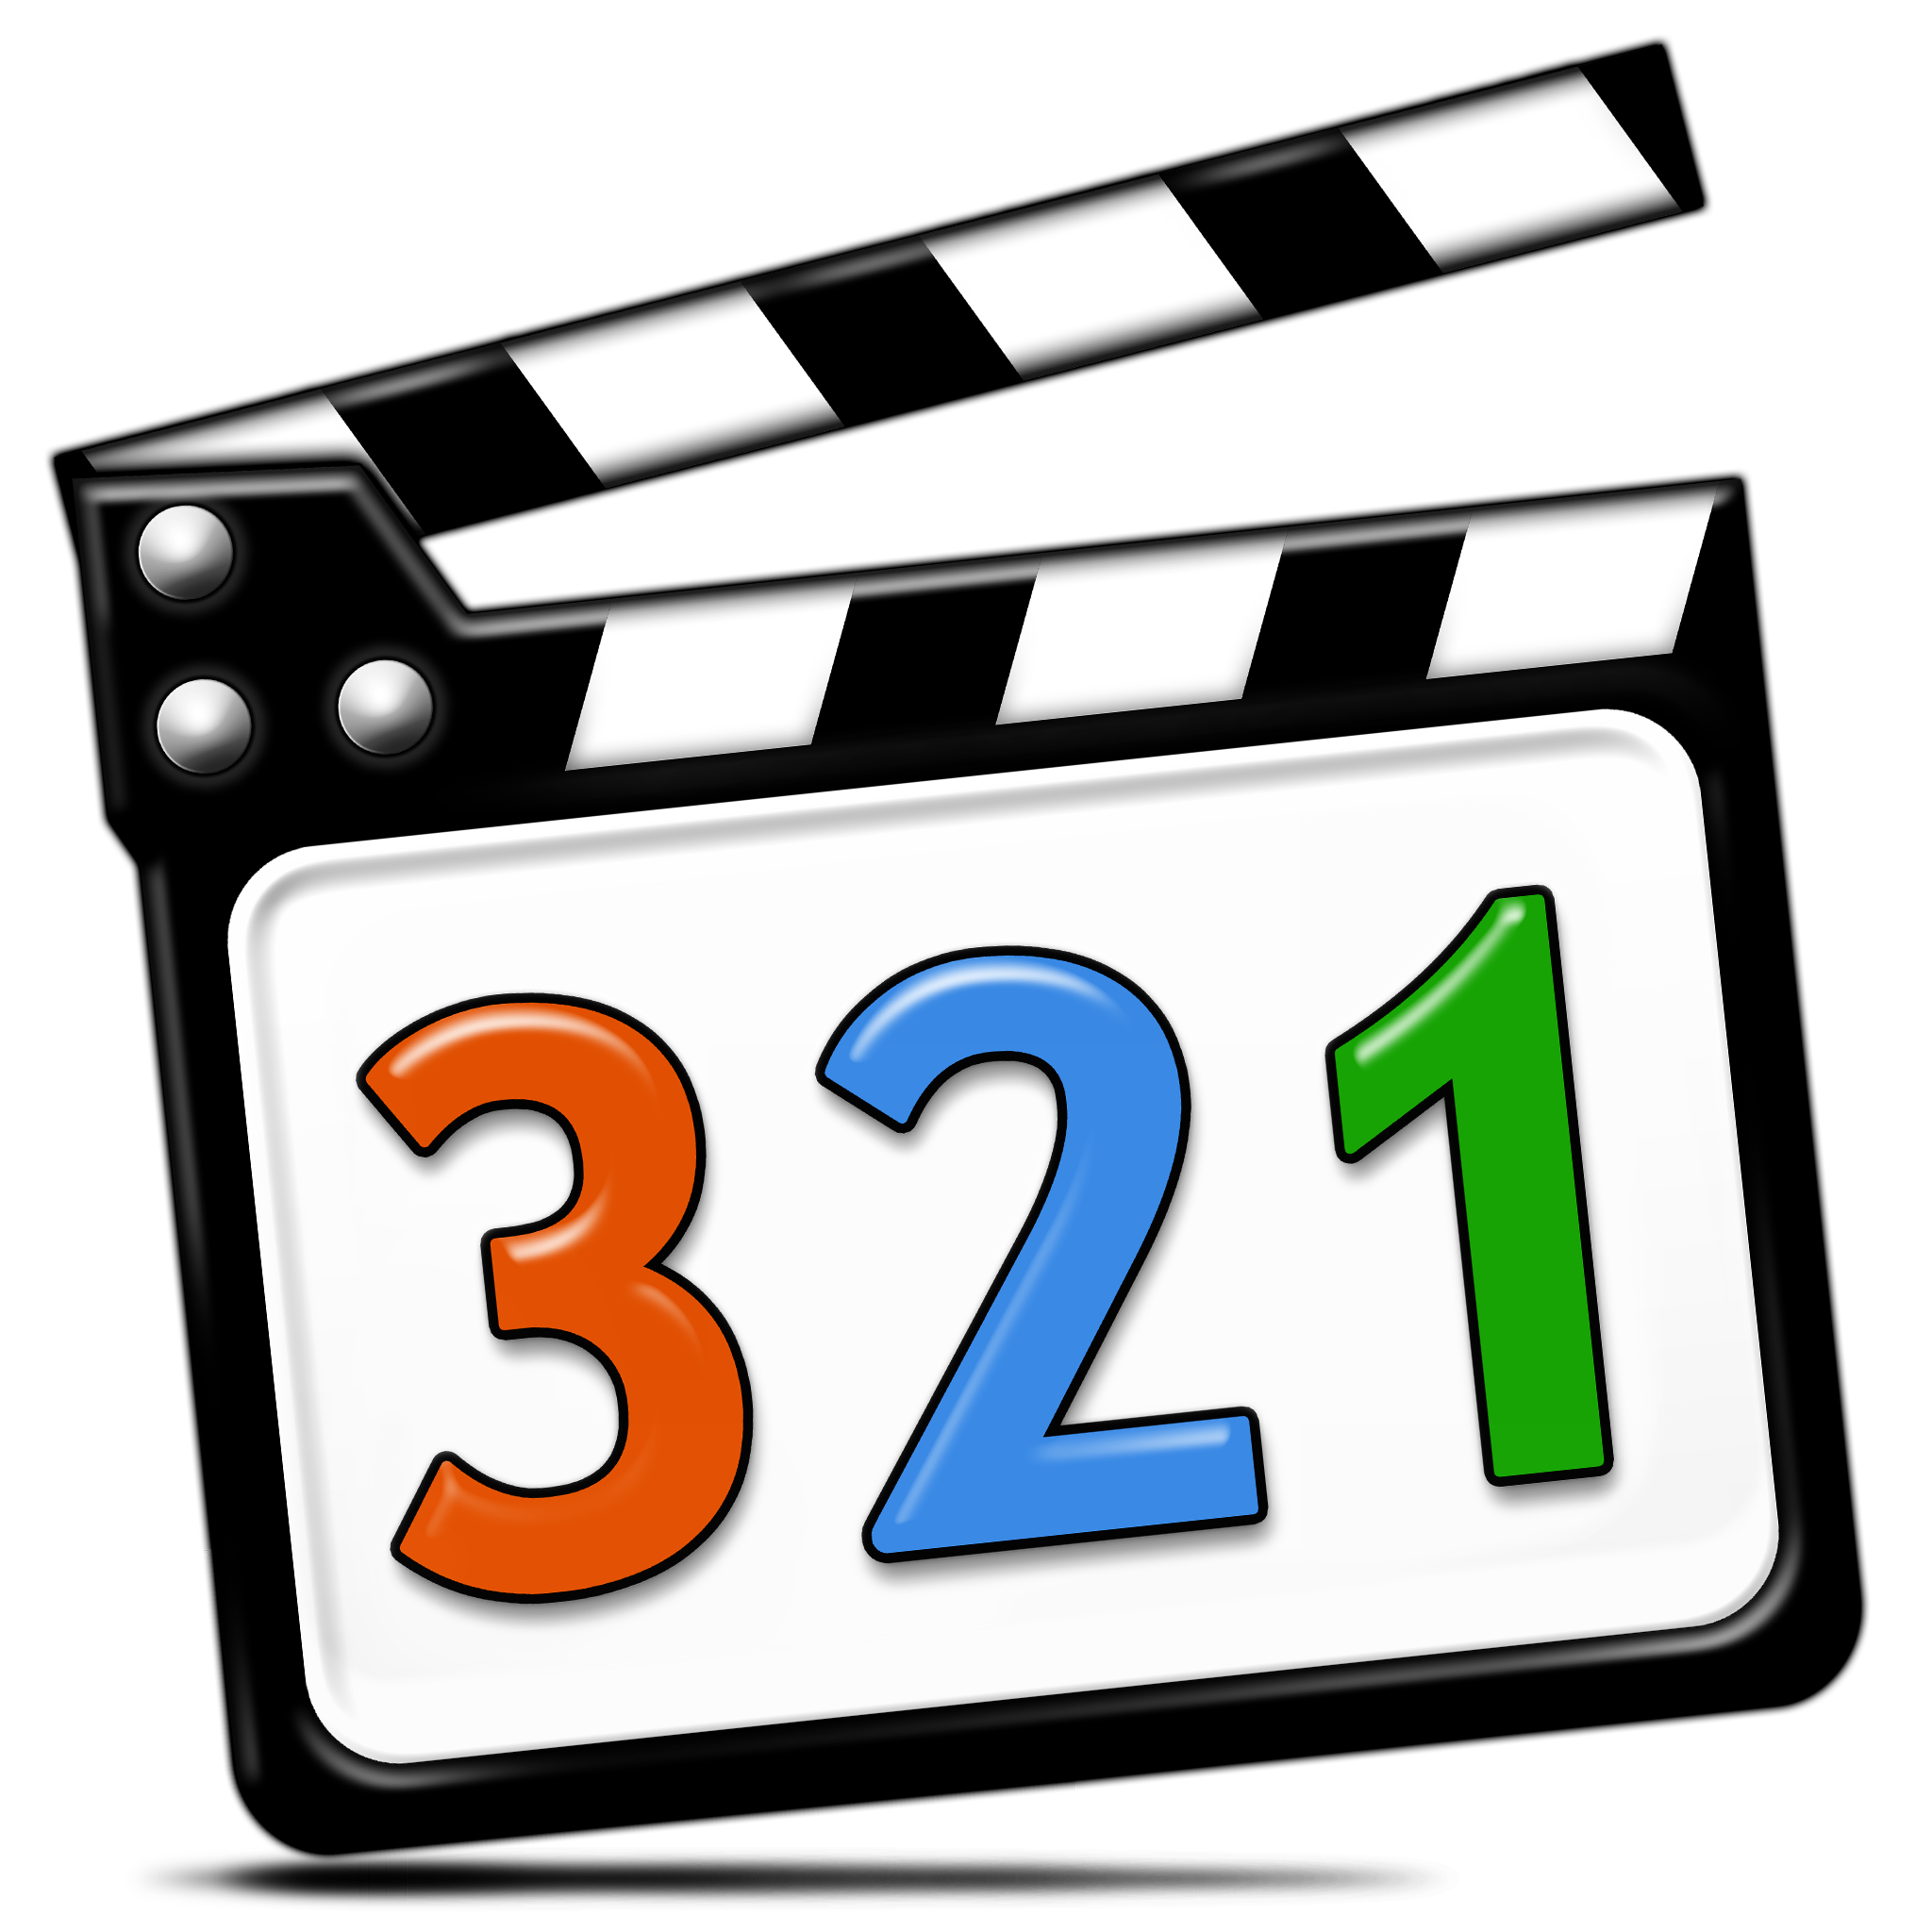 media player classic home cinema 32 bit